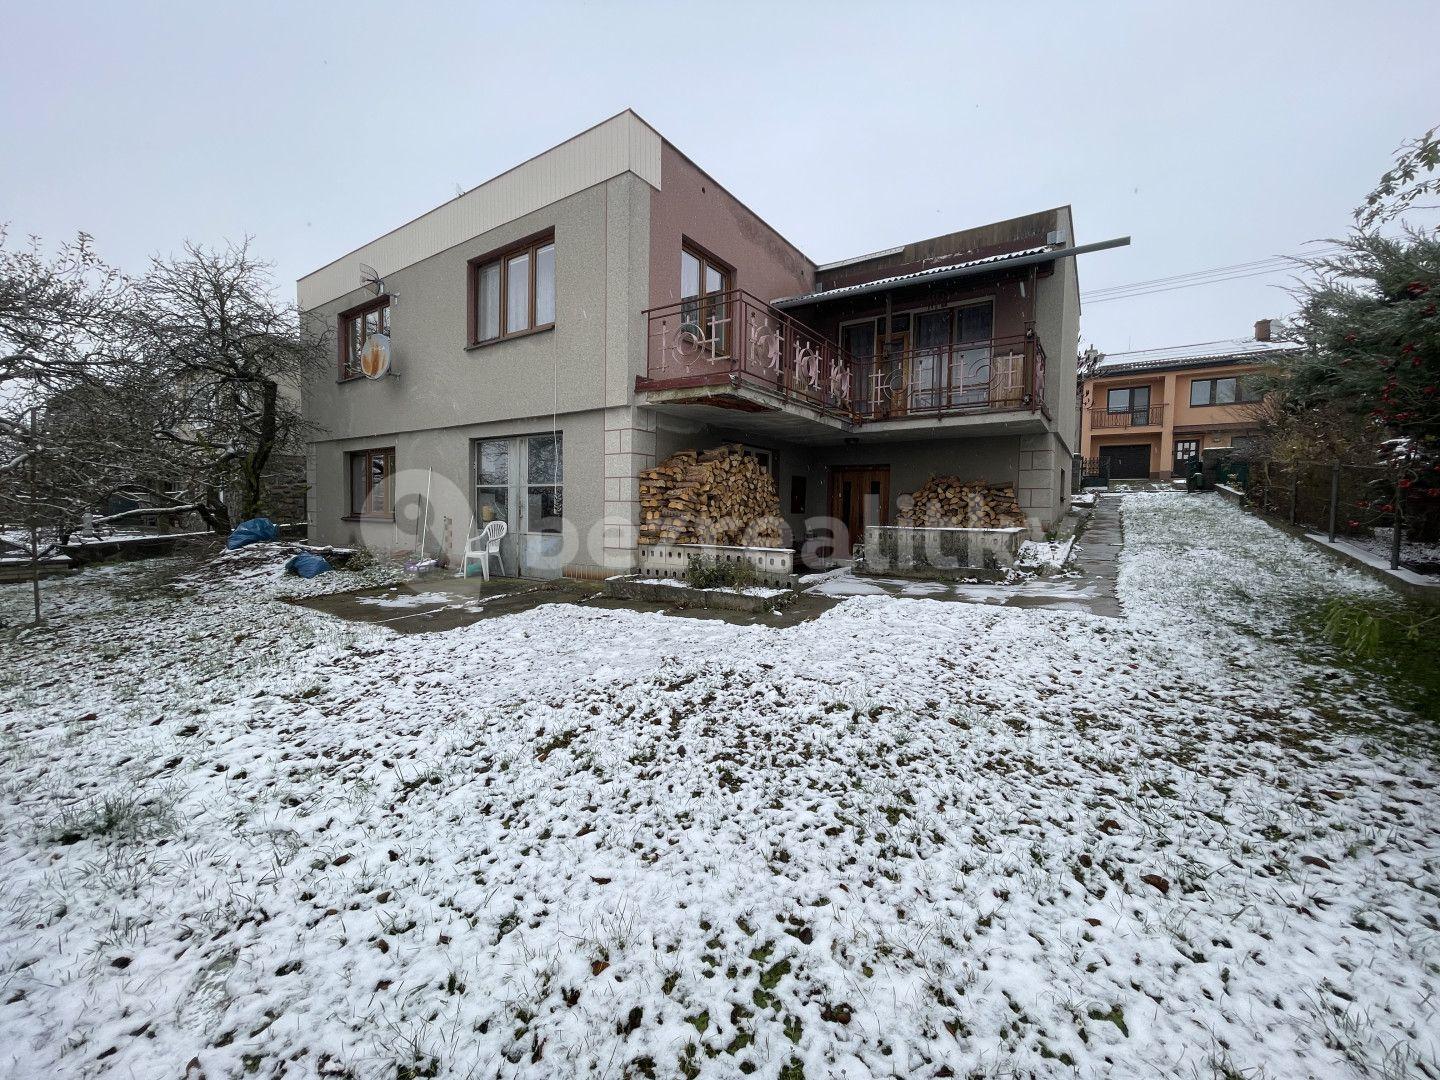 Prodej domu 210 m², pozemek 800 m², Cihelna II, Konice, Olomoucký kraj